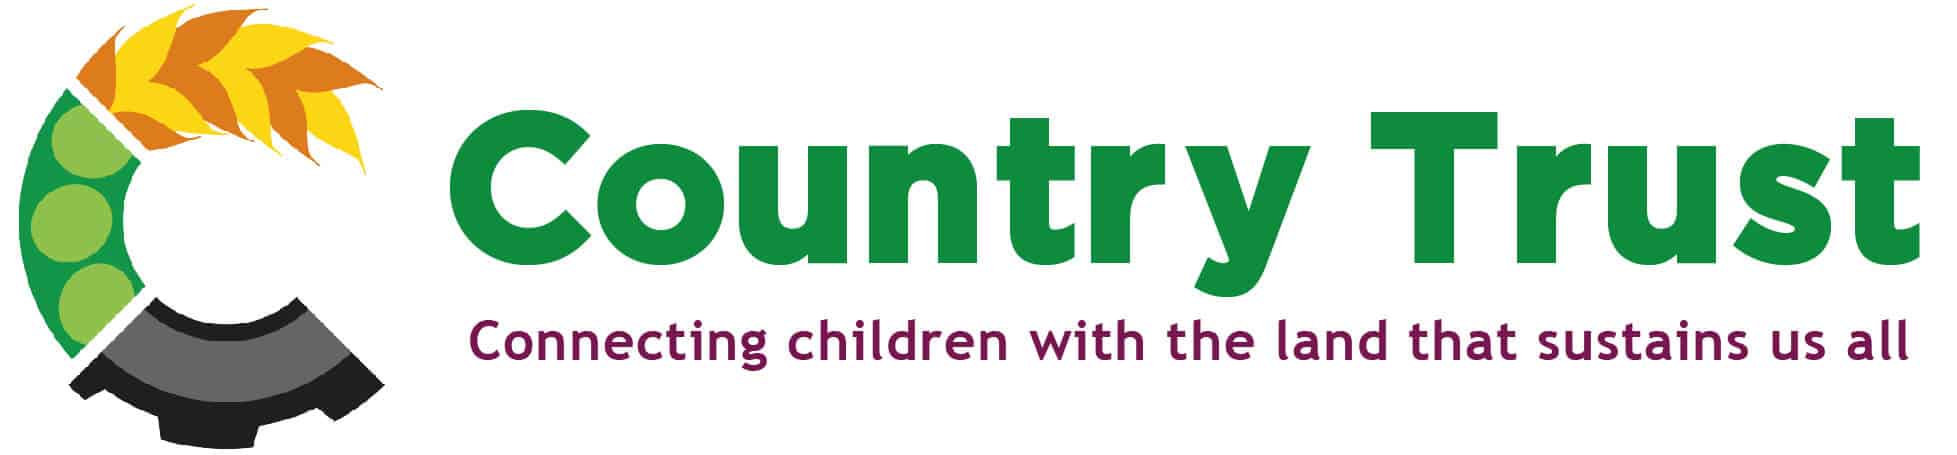 Country Trust logo